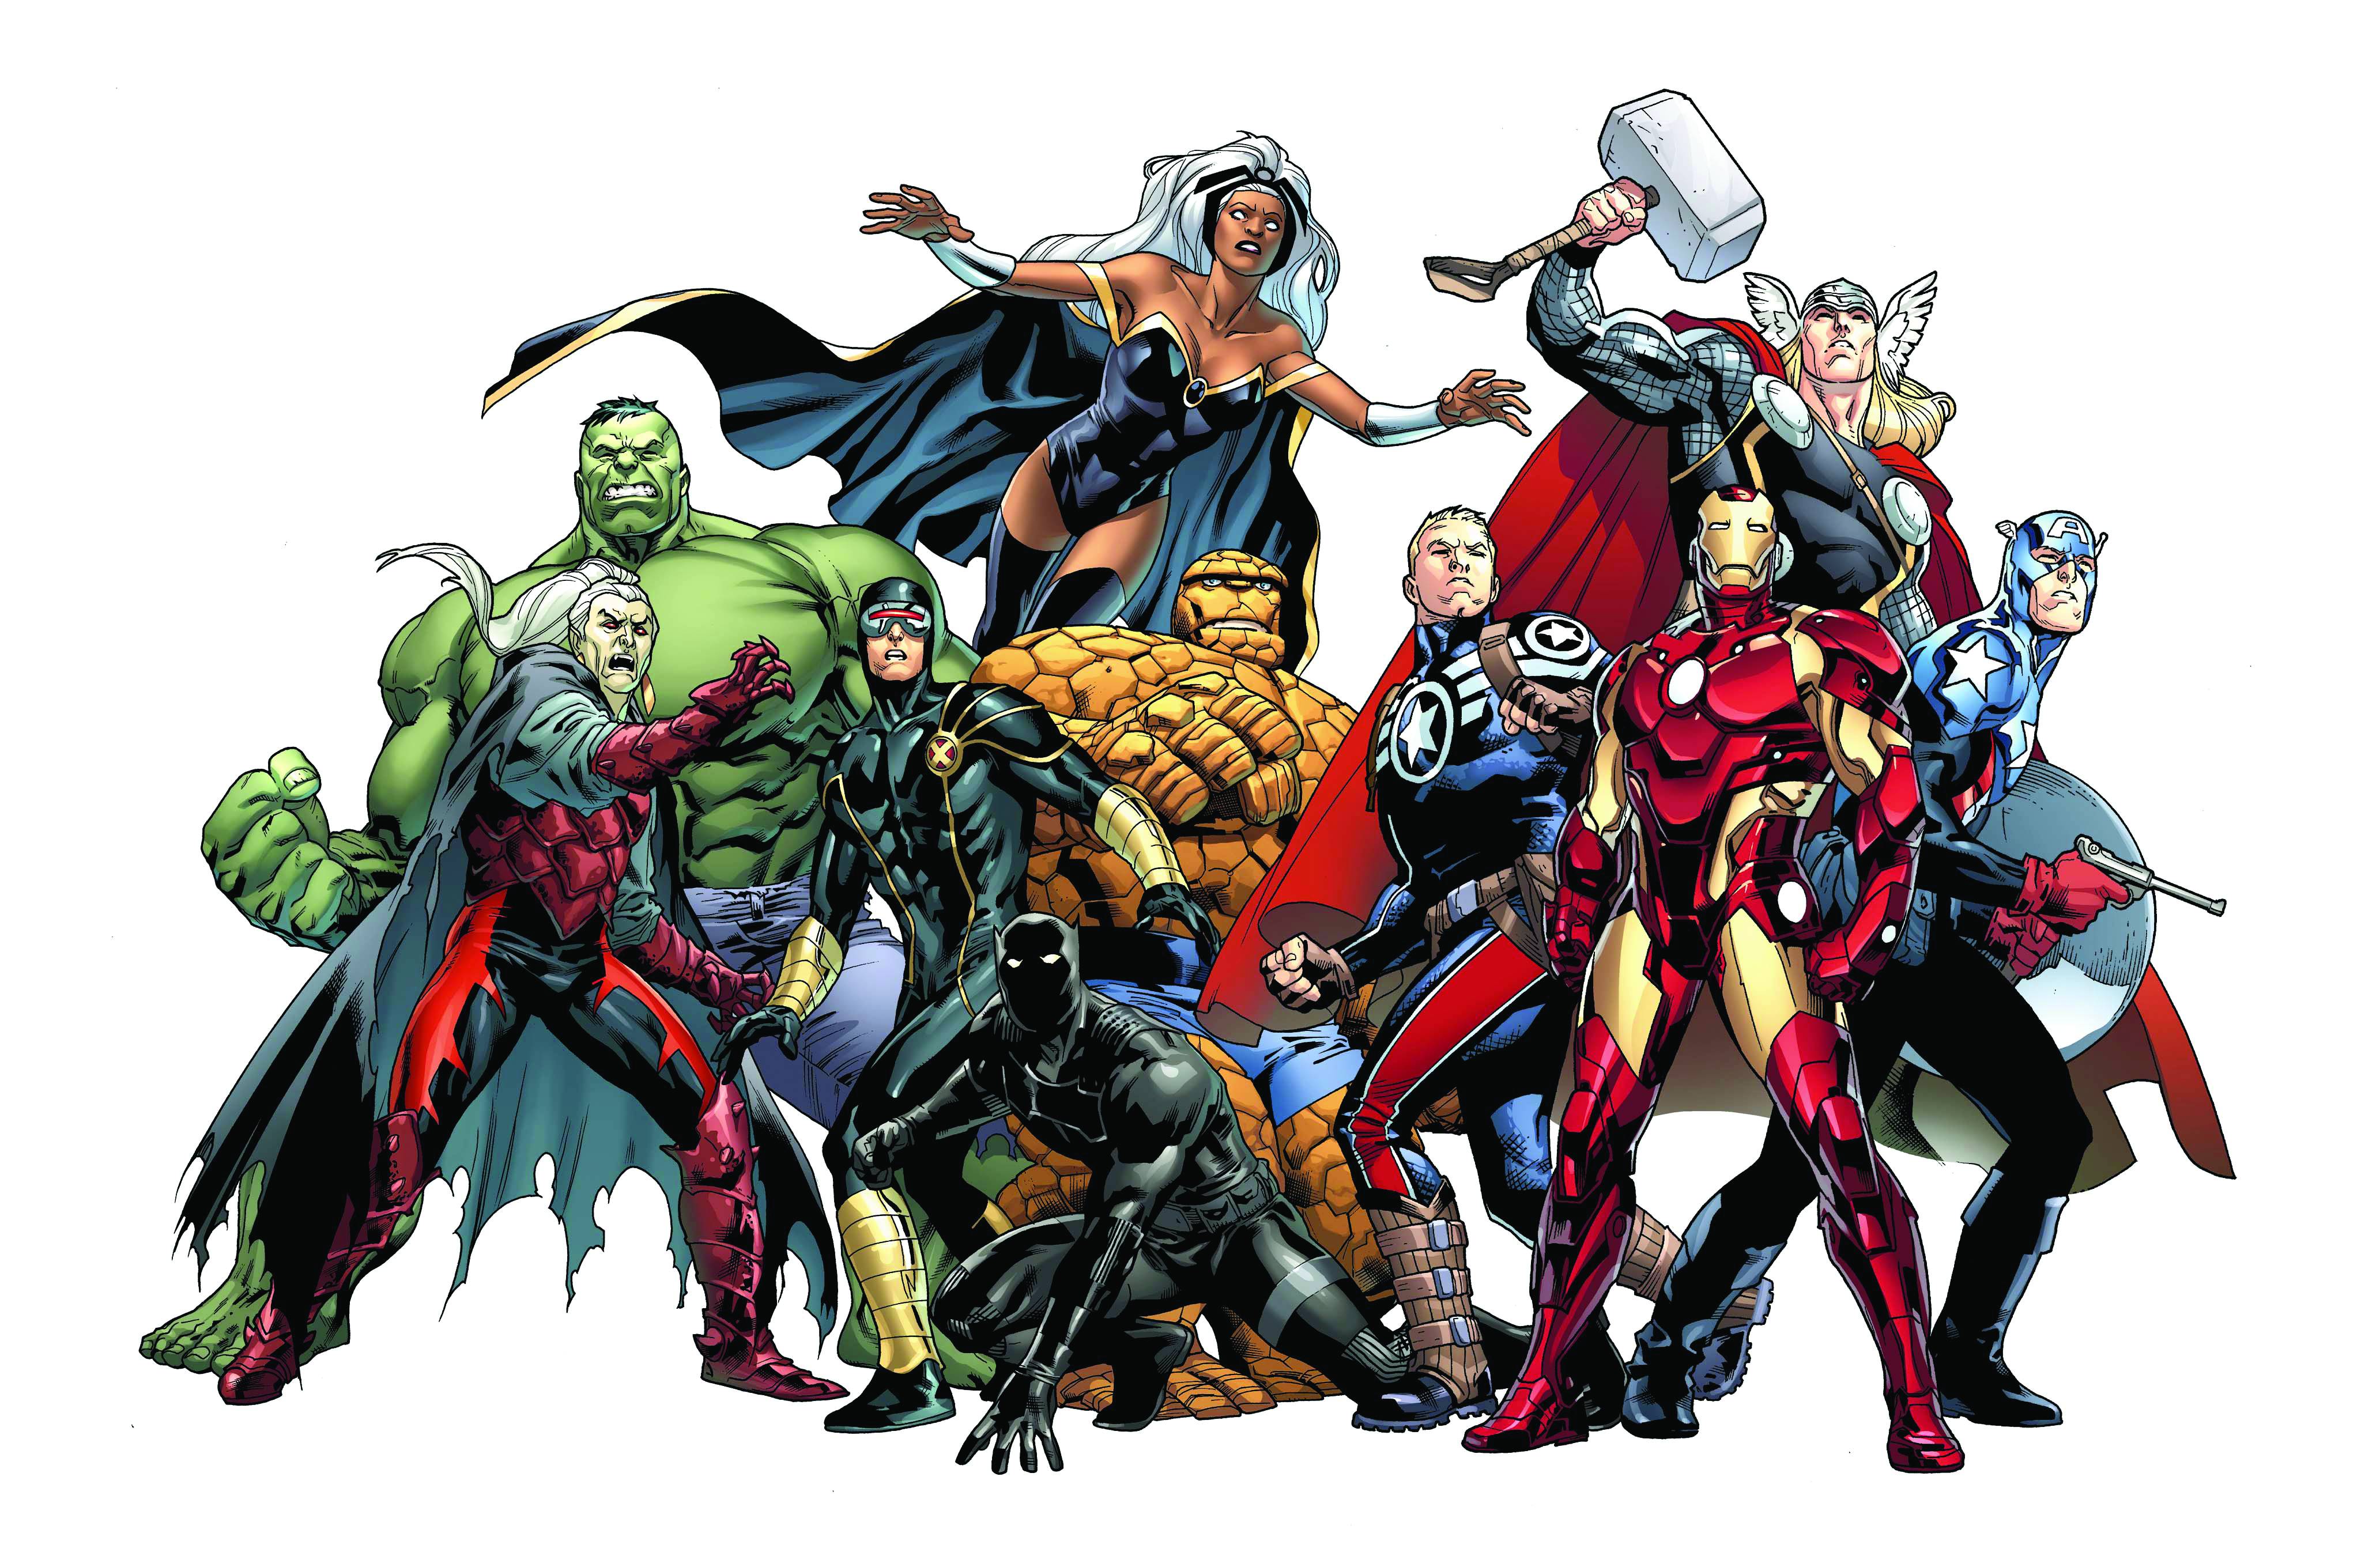 [48+] Marvel DC Superheroes Wallpaper on WallpaperSafari